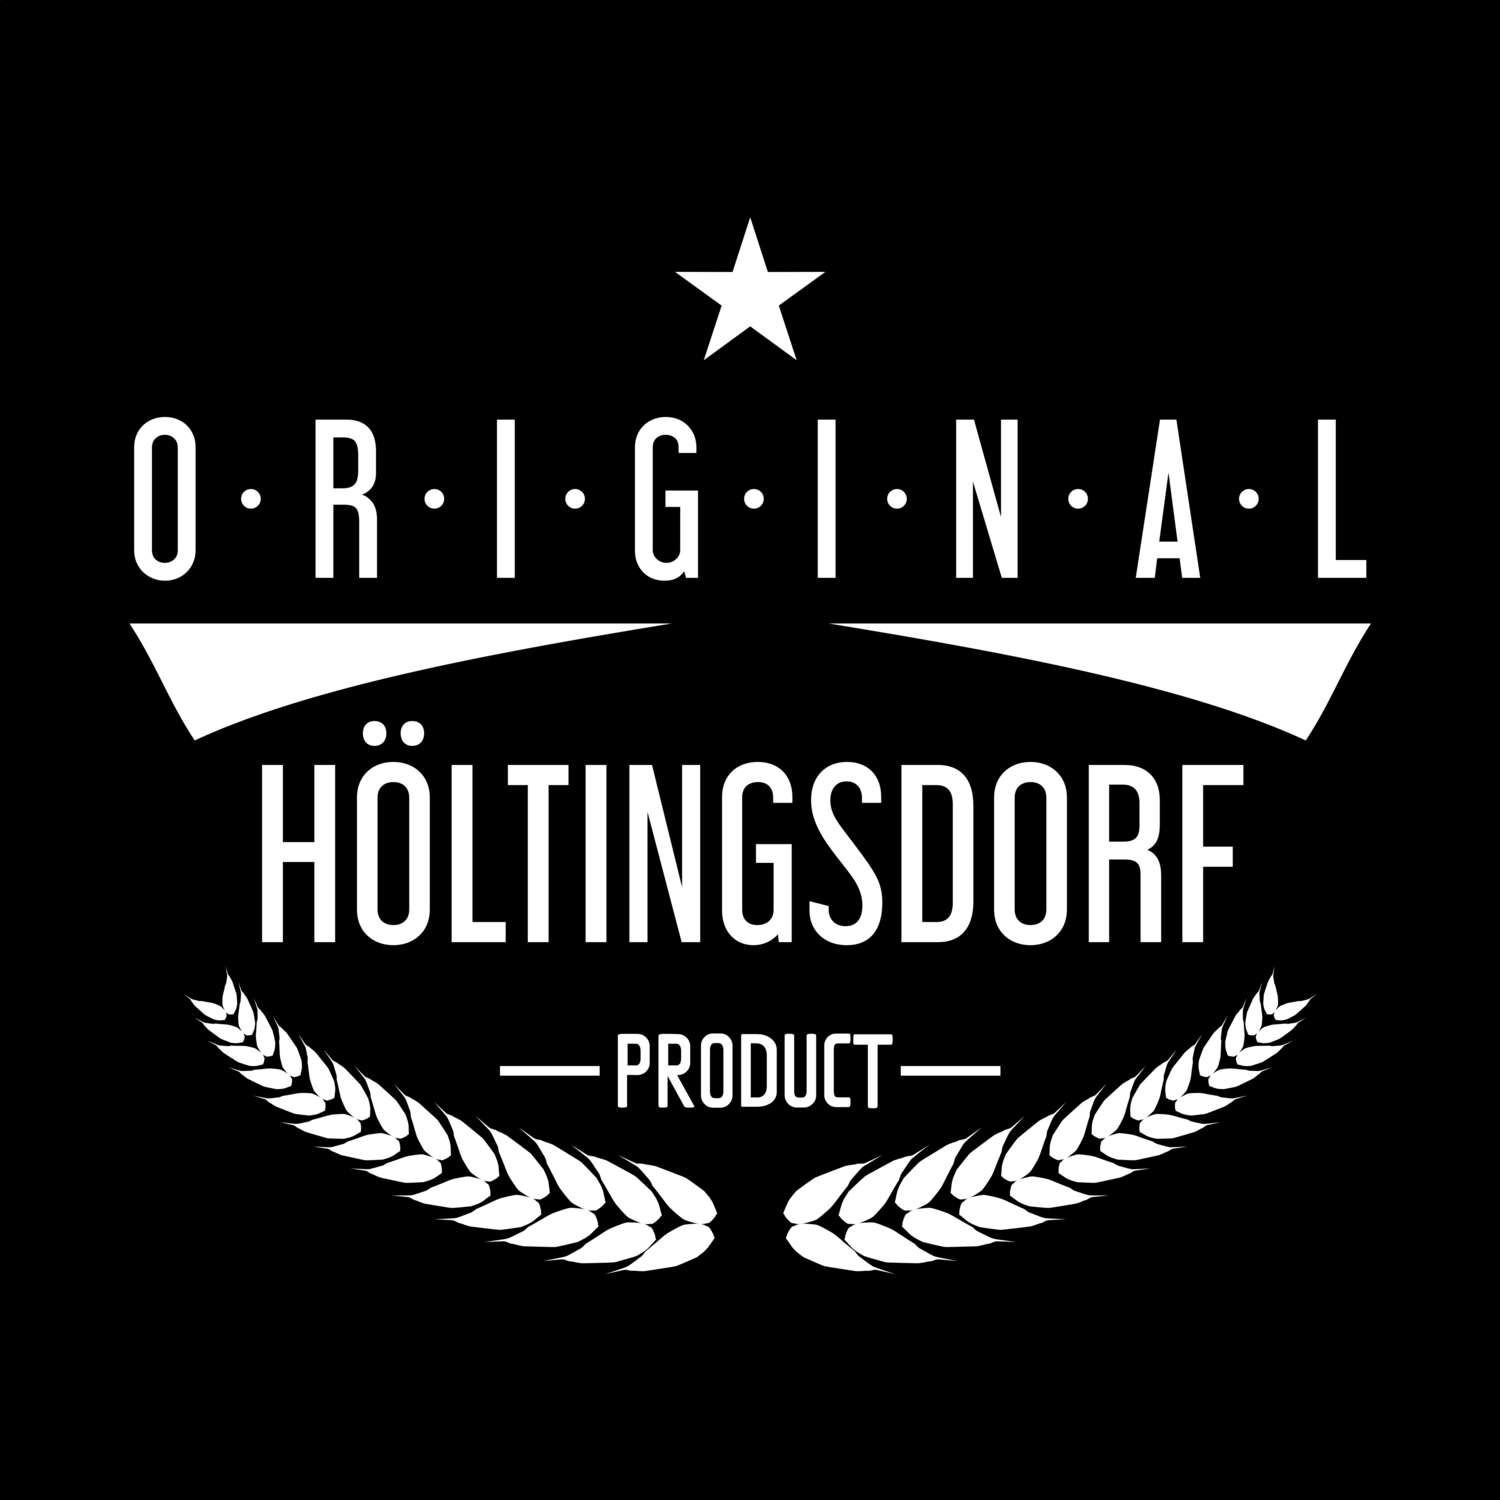 Höltingsdorf T-Shirt »Original Product«